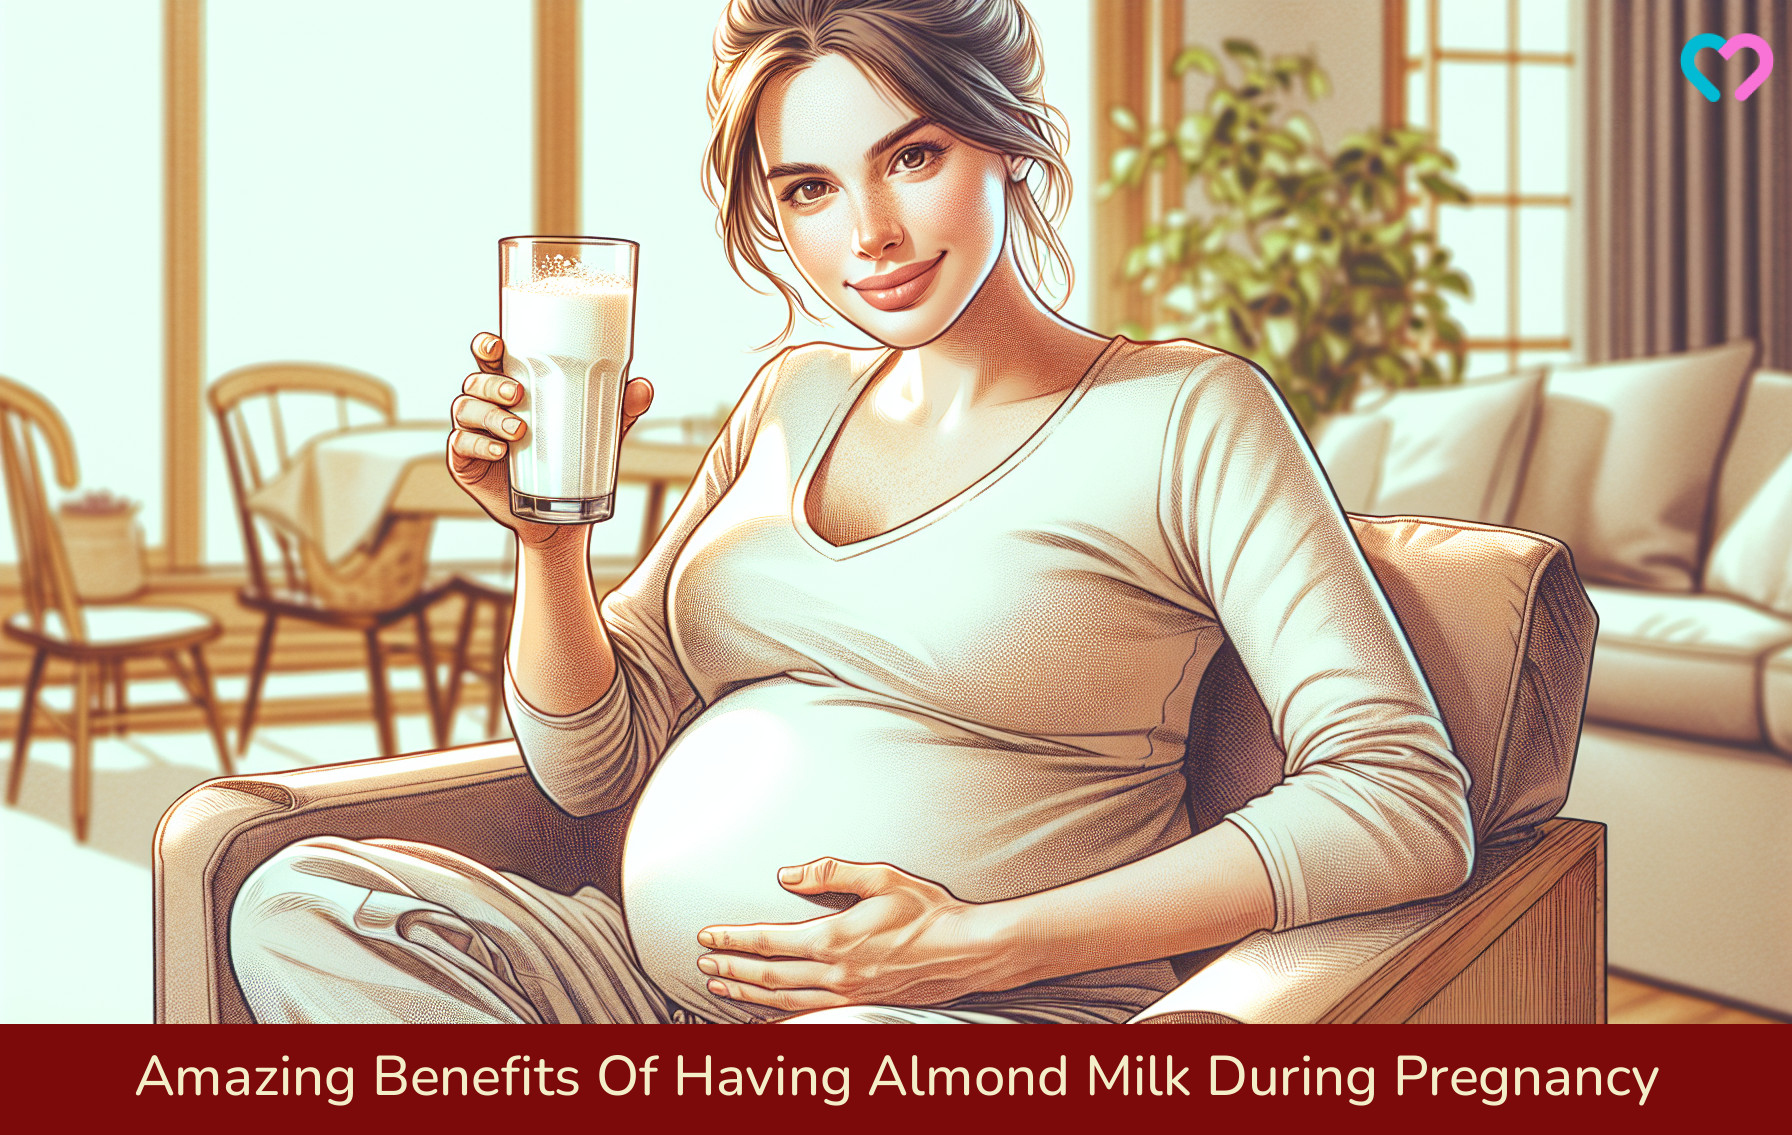 almond milk during pregnancy_illustration